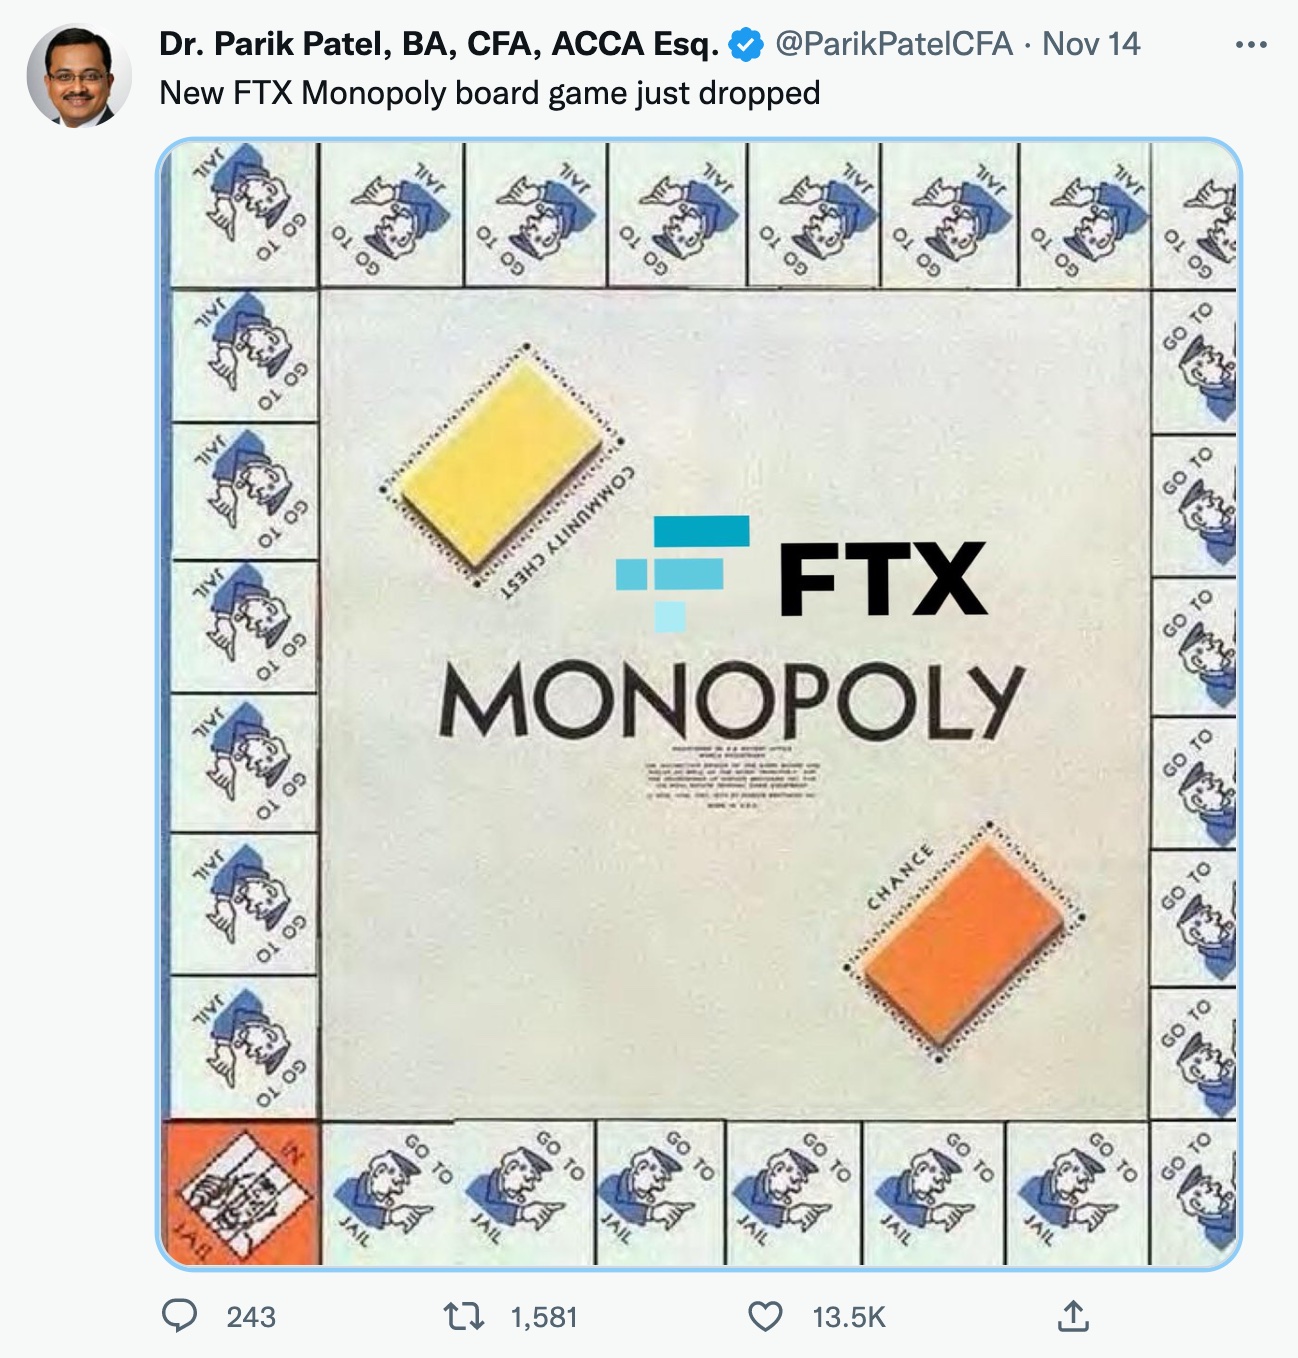 FTX Monopoly